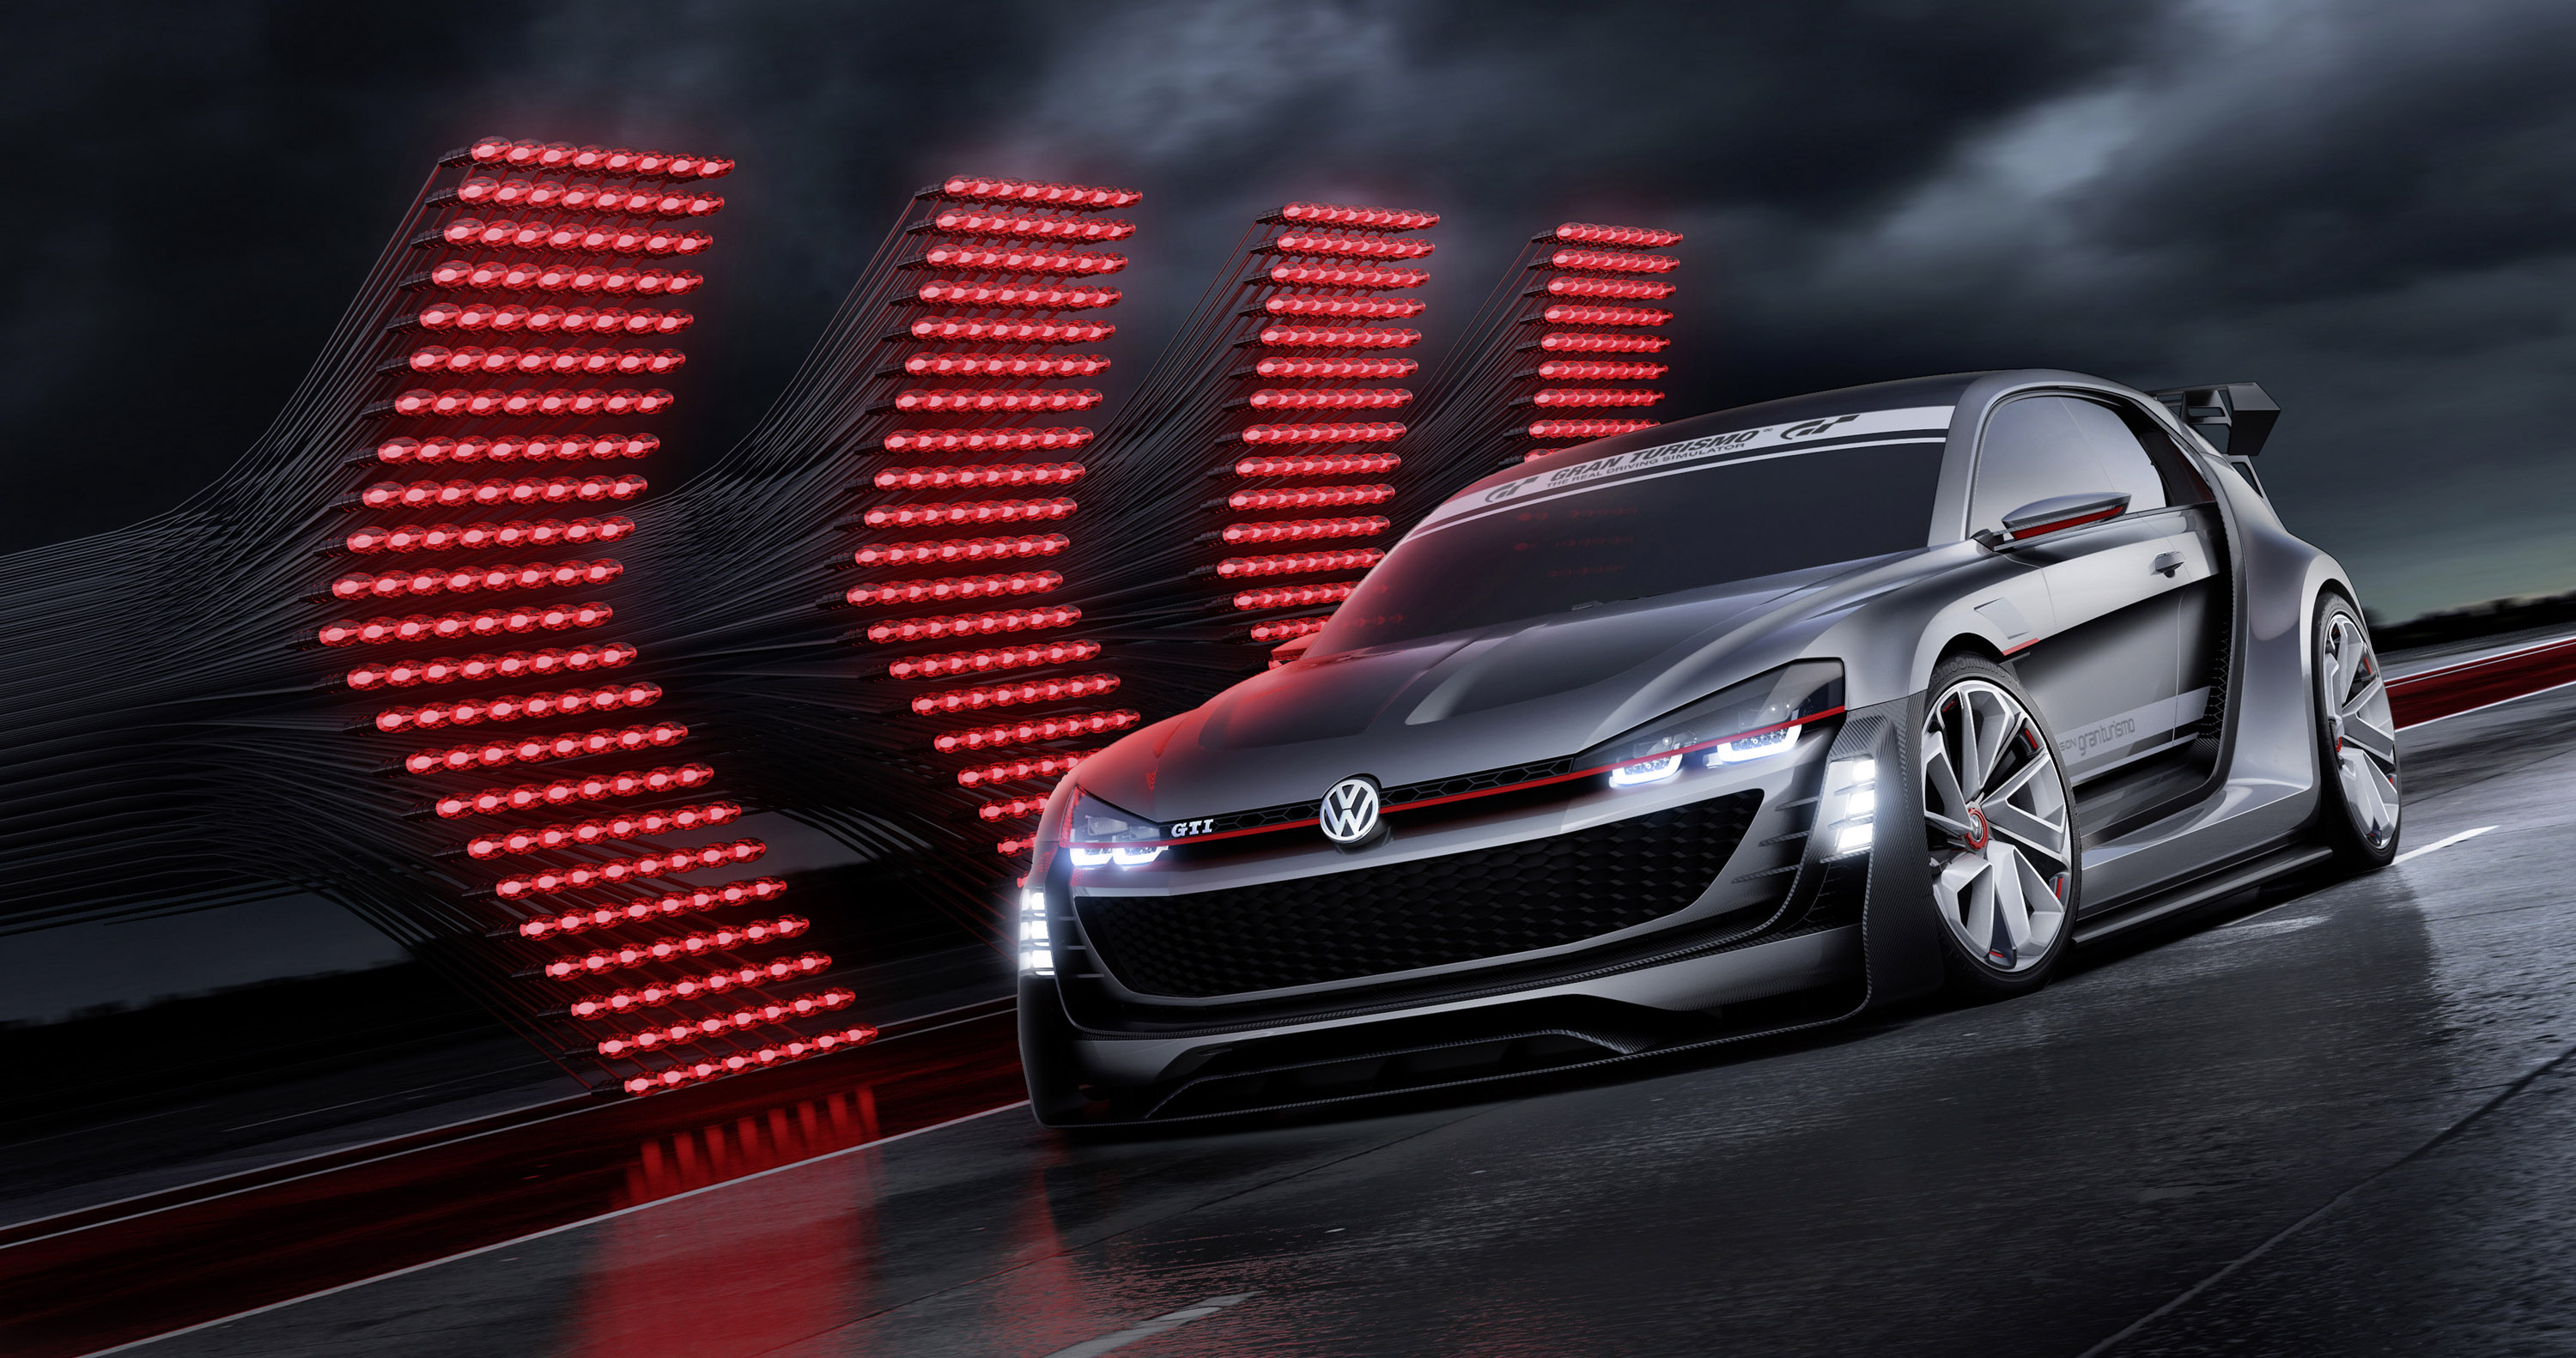 Volkswagen GTI Supersport Vision Gran Turismo Concept photo #1